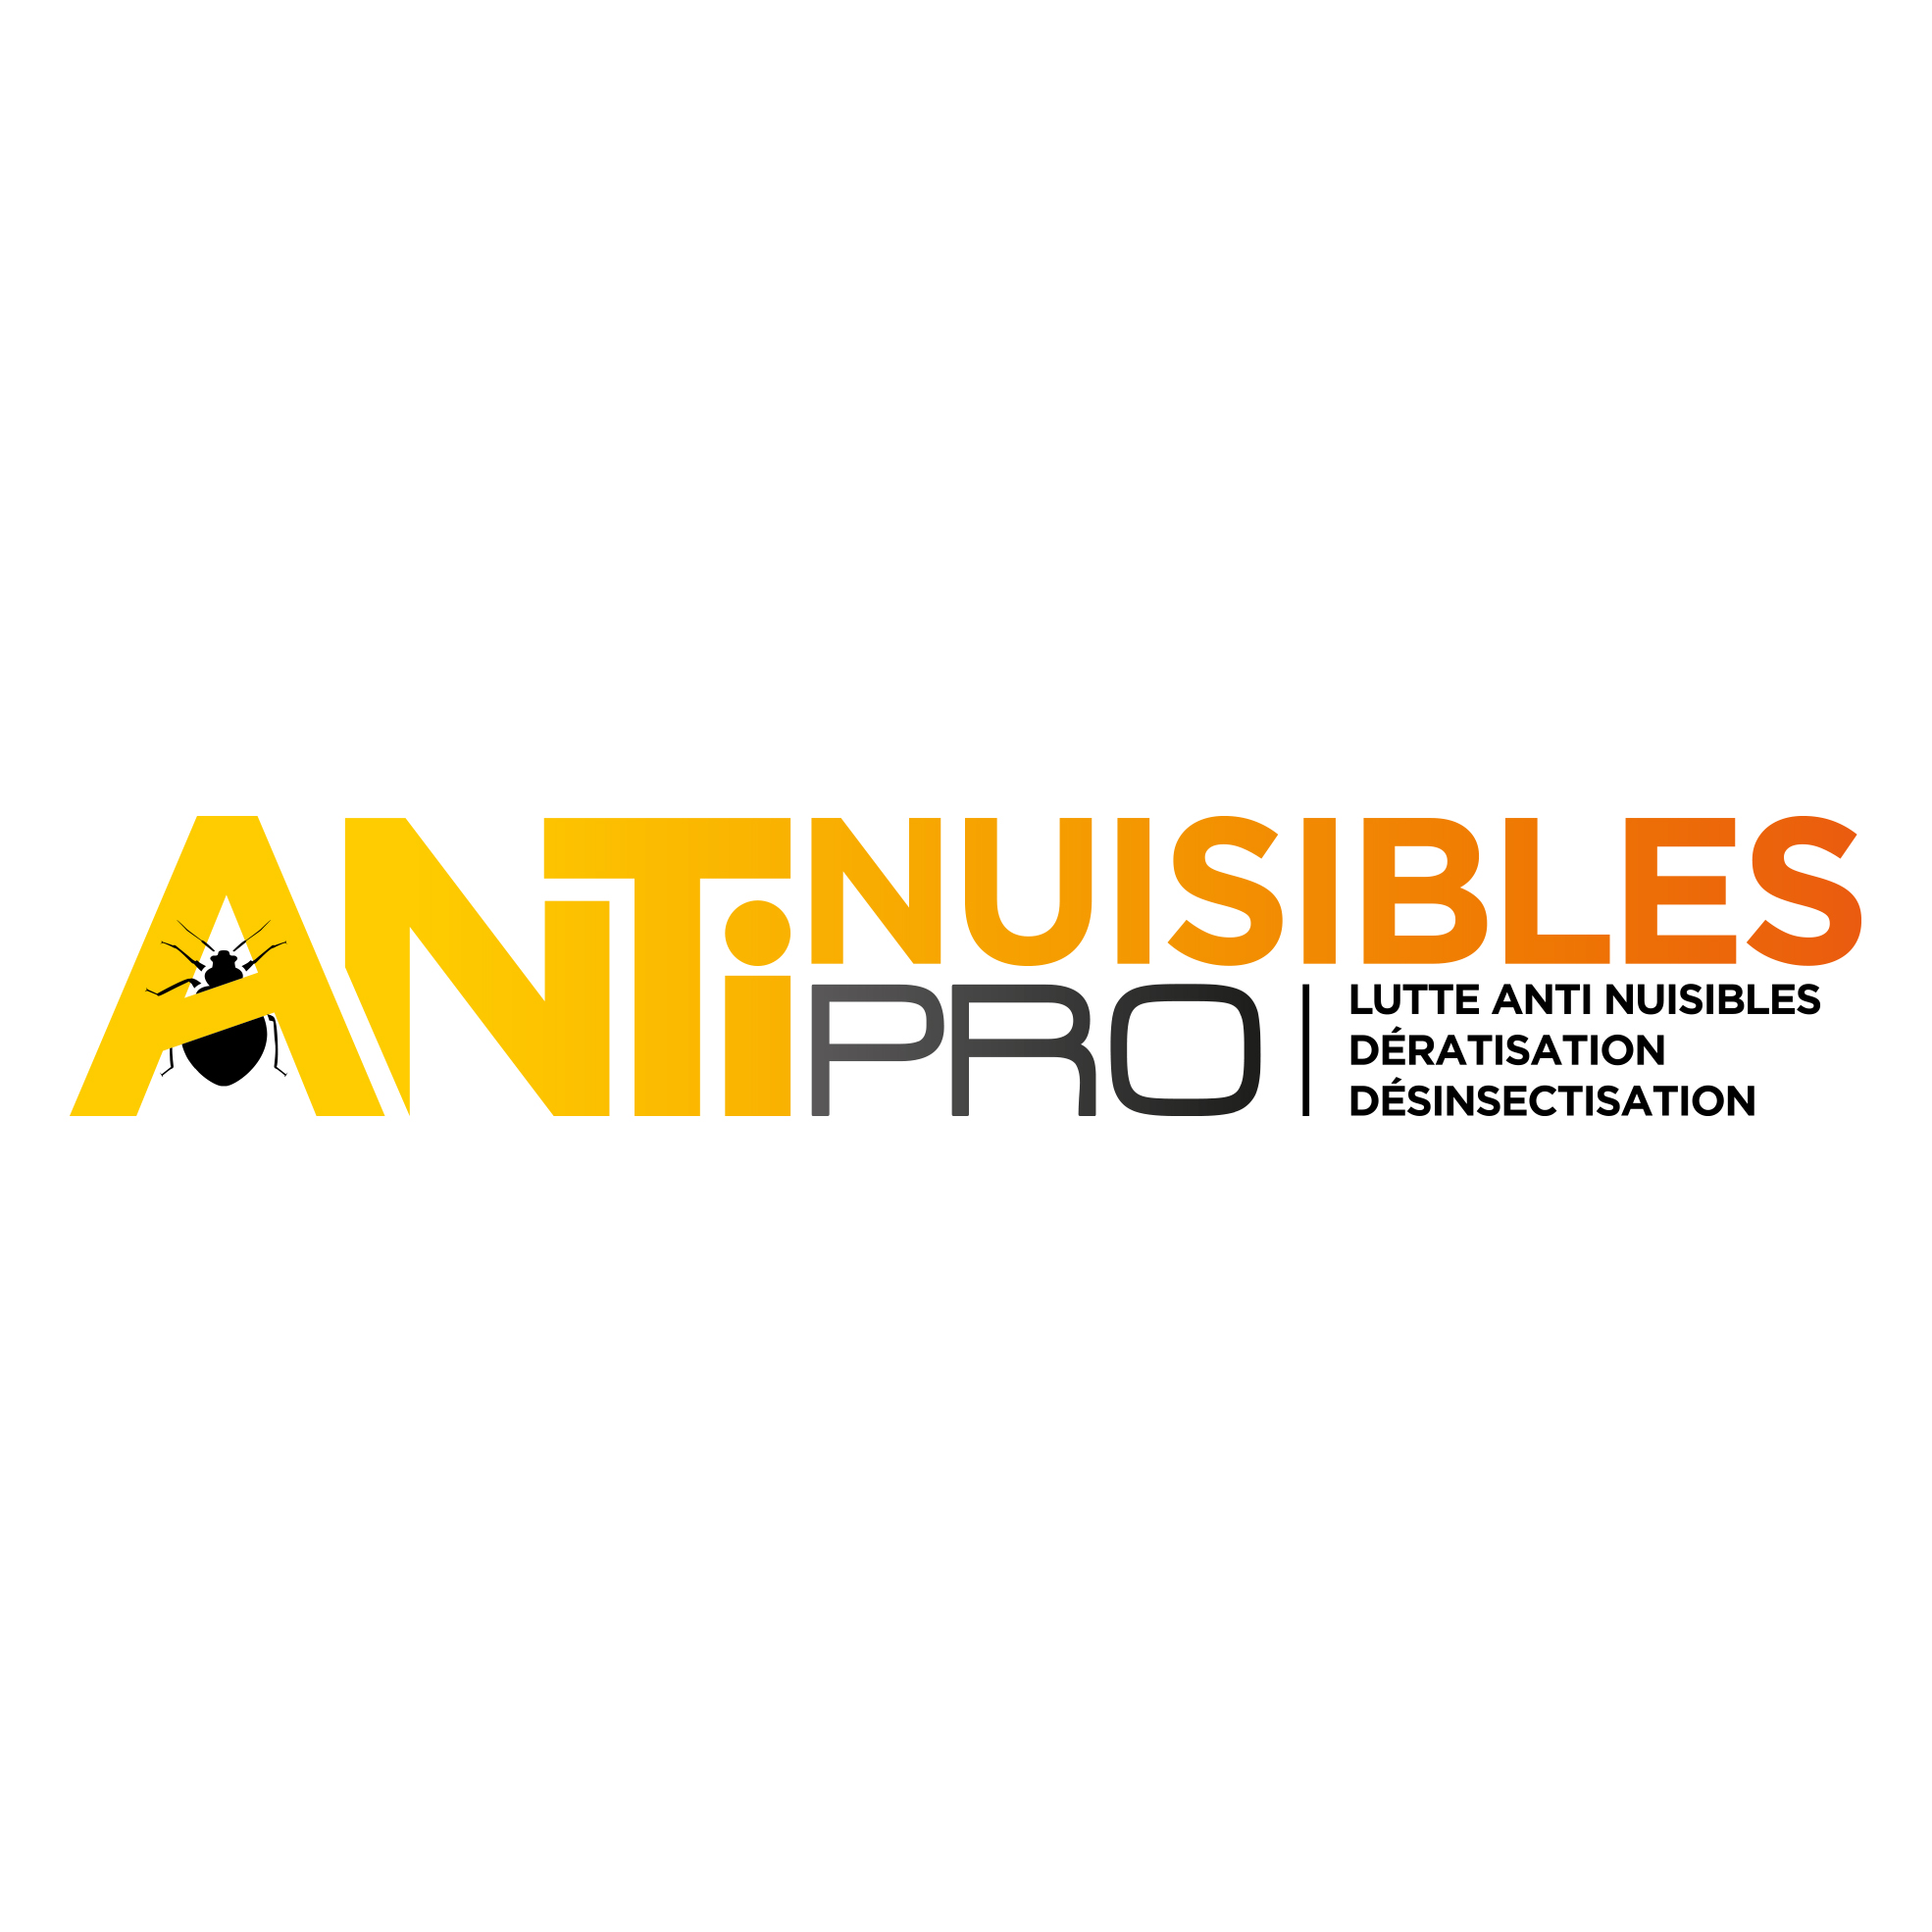 Antinuisibles Pro